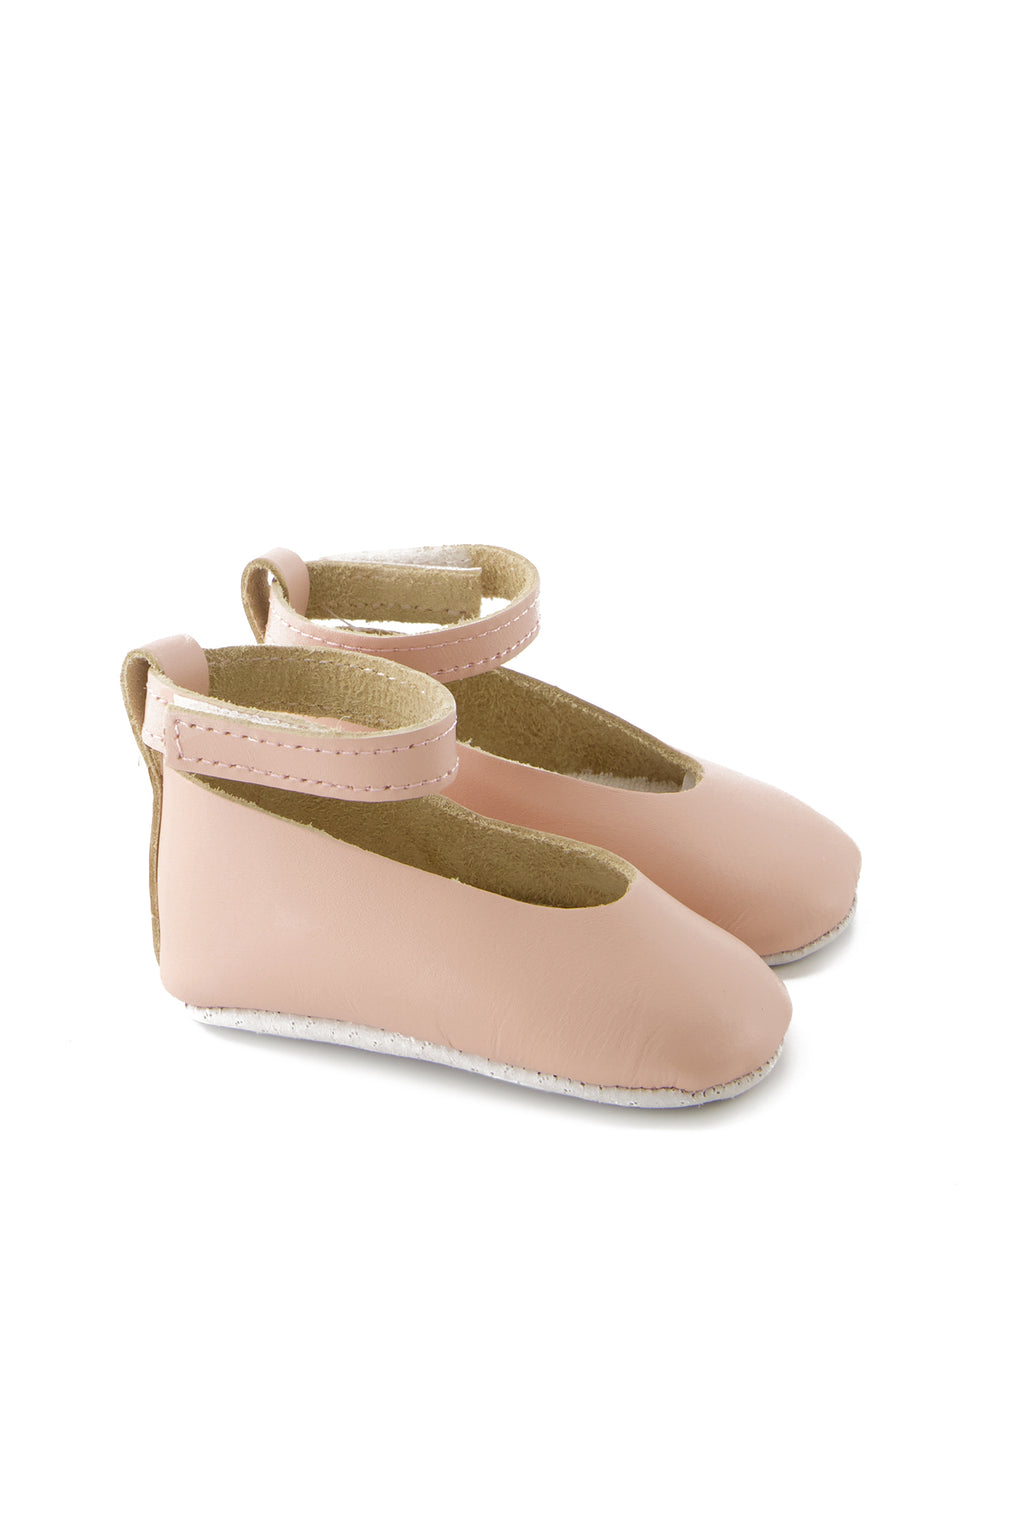 Slippers - Pale pink ballerinas